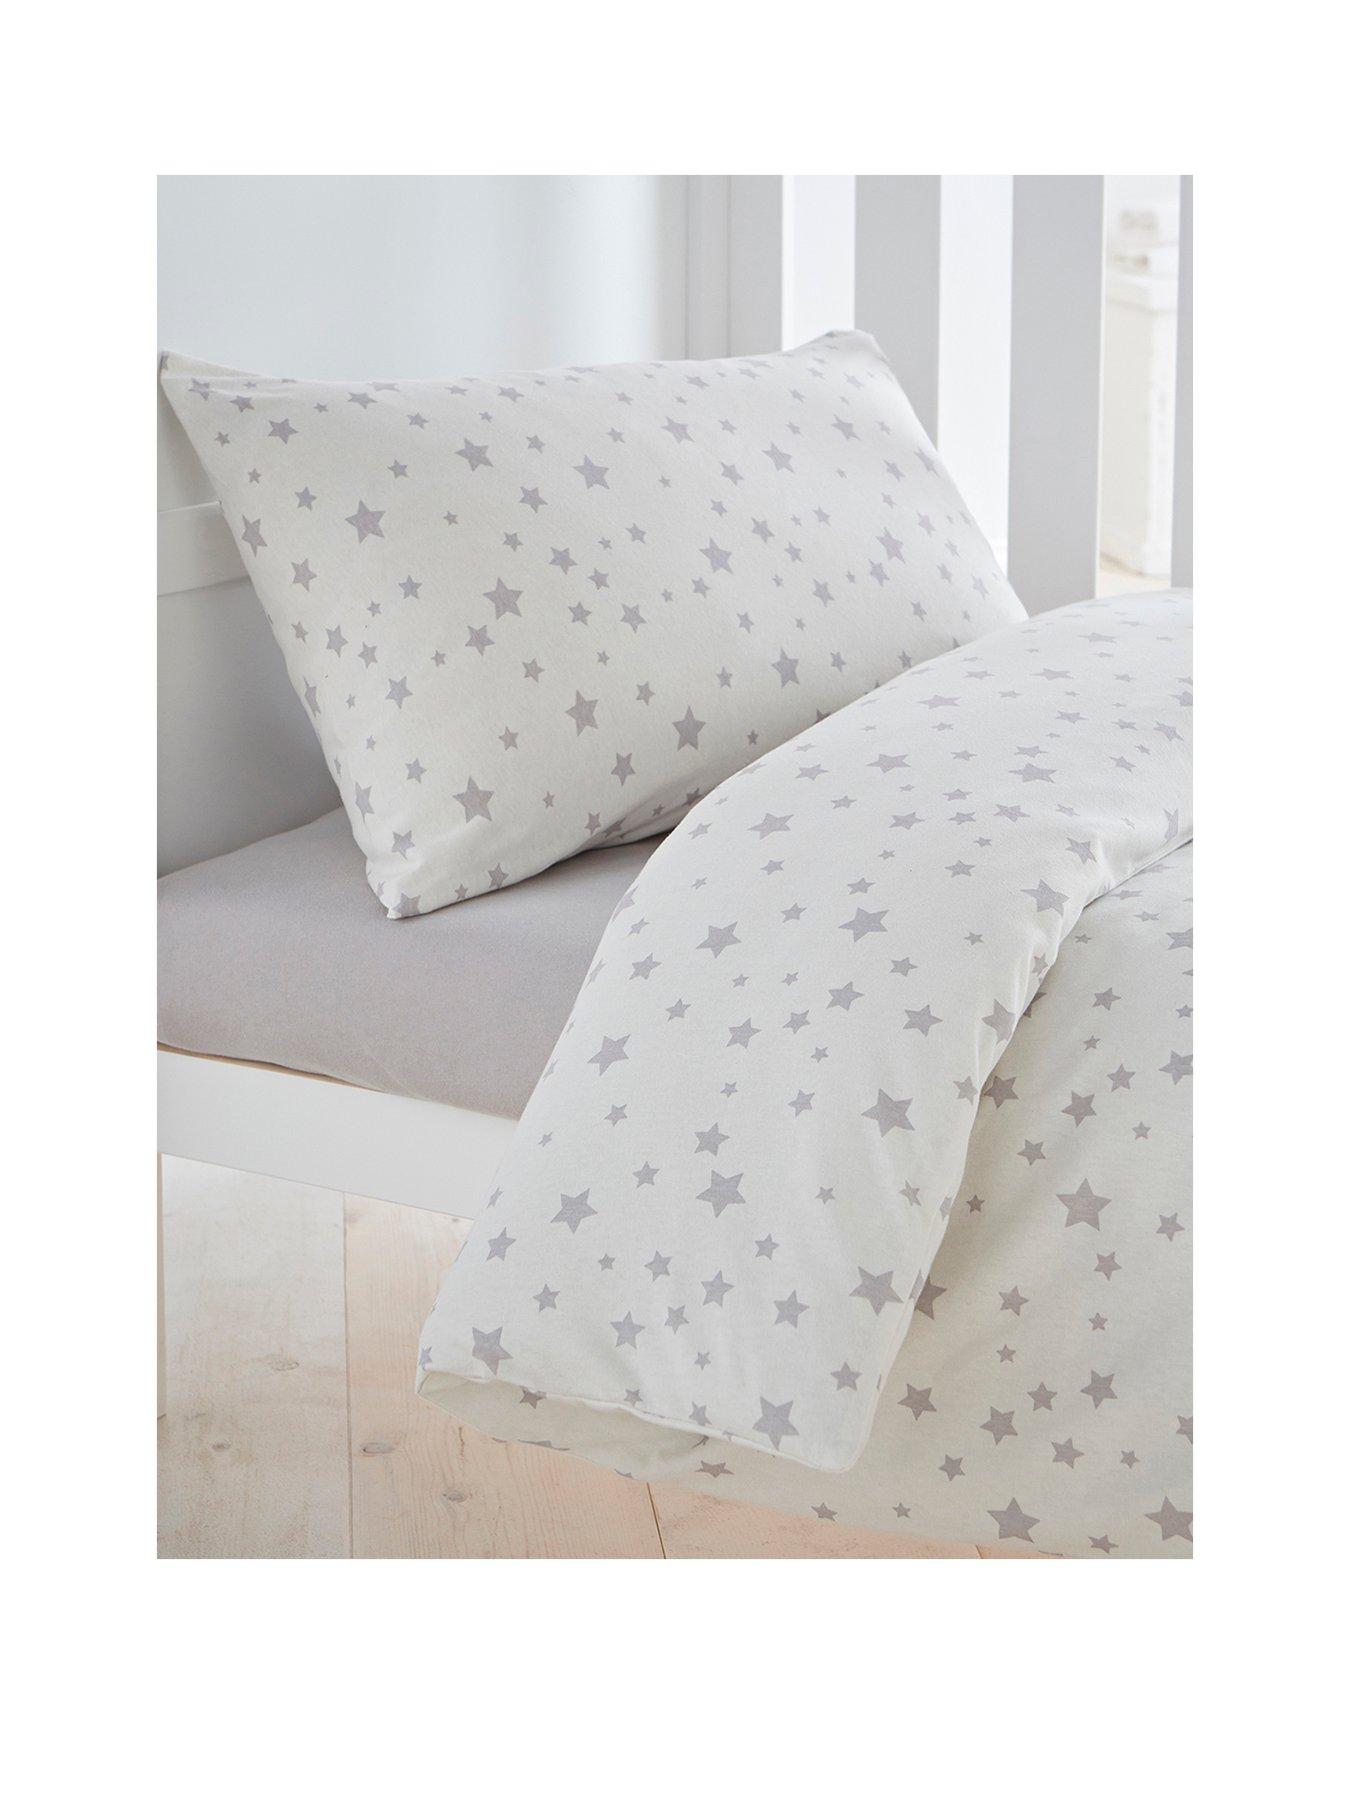 Silentnight Printed Stars Cot Bed Duvet 